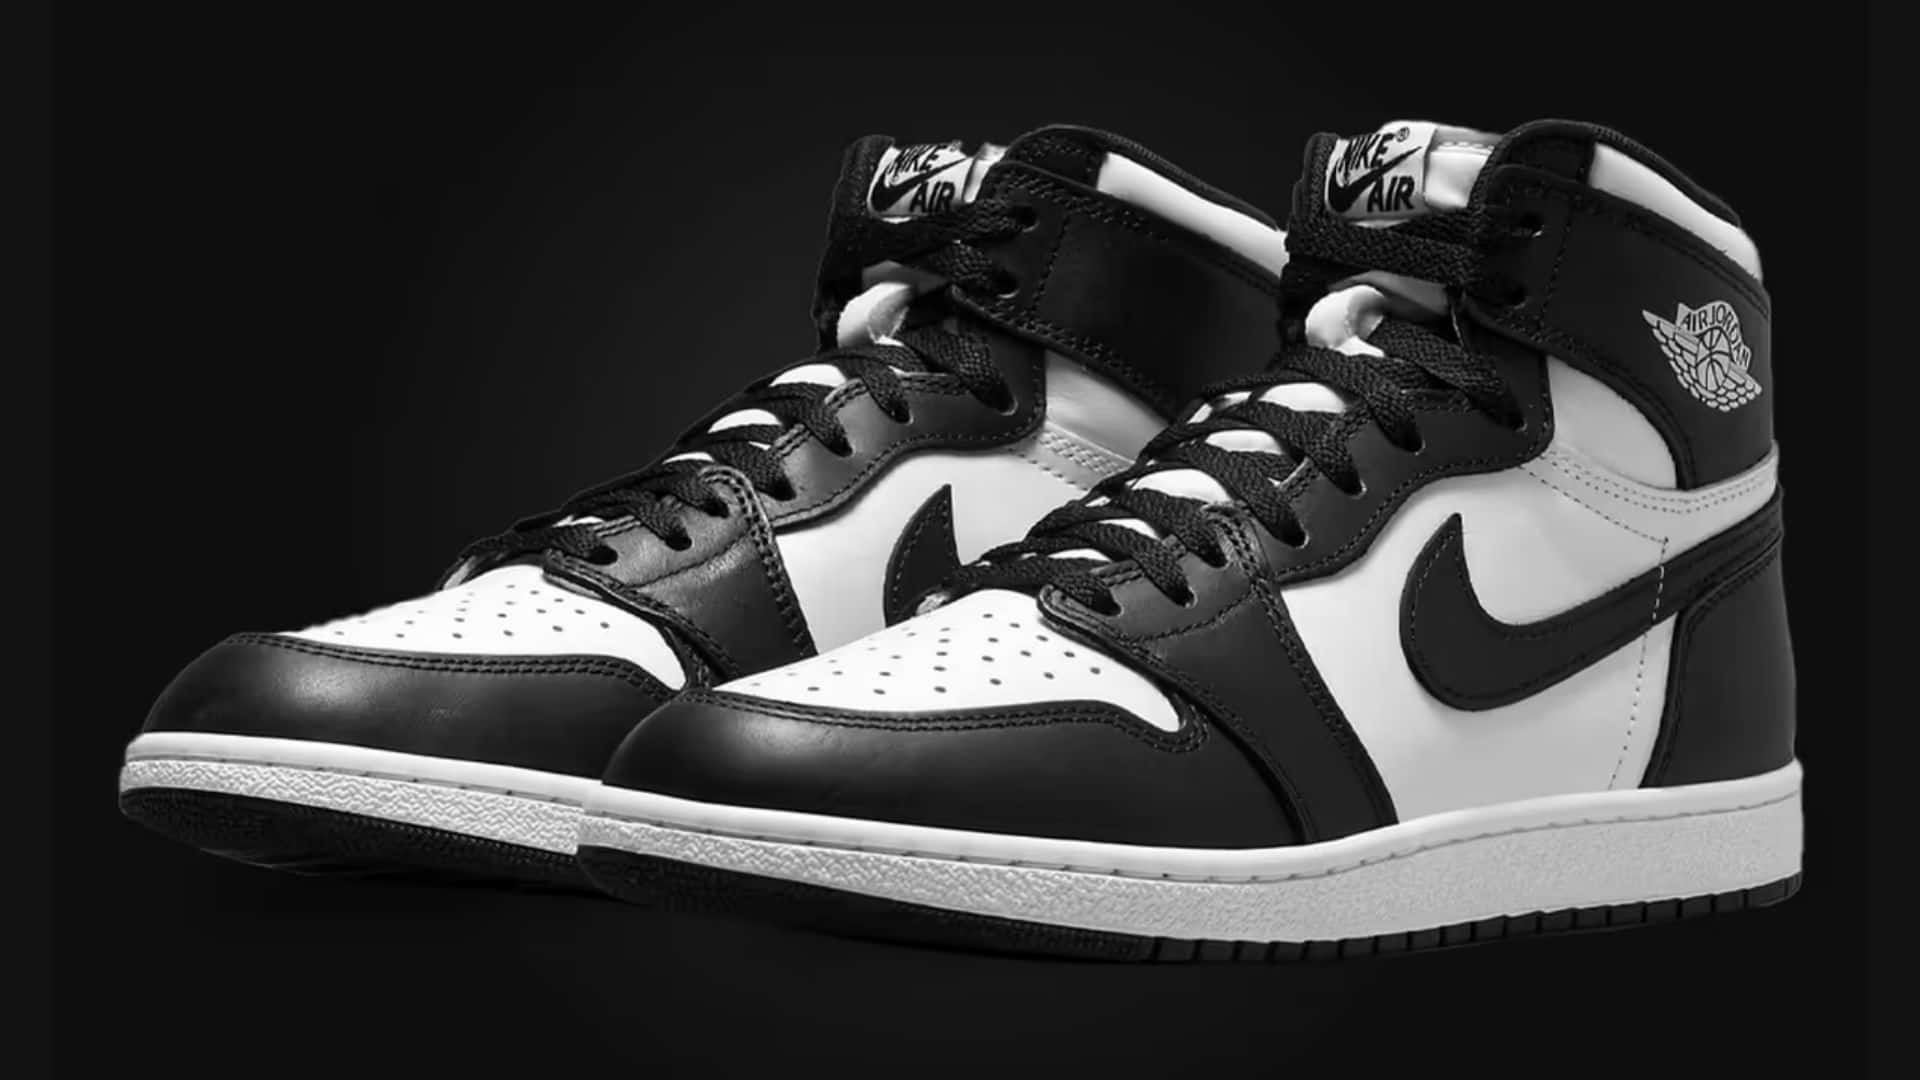 Nike Air Jordan I Black And White Wallpaper